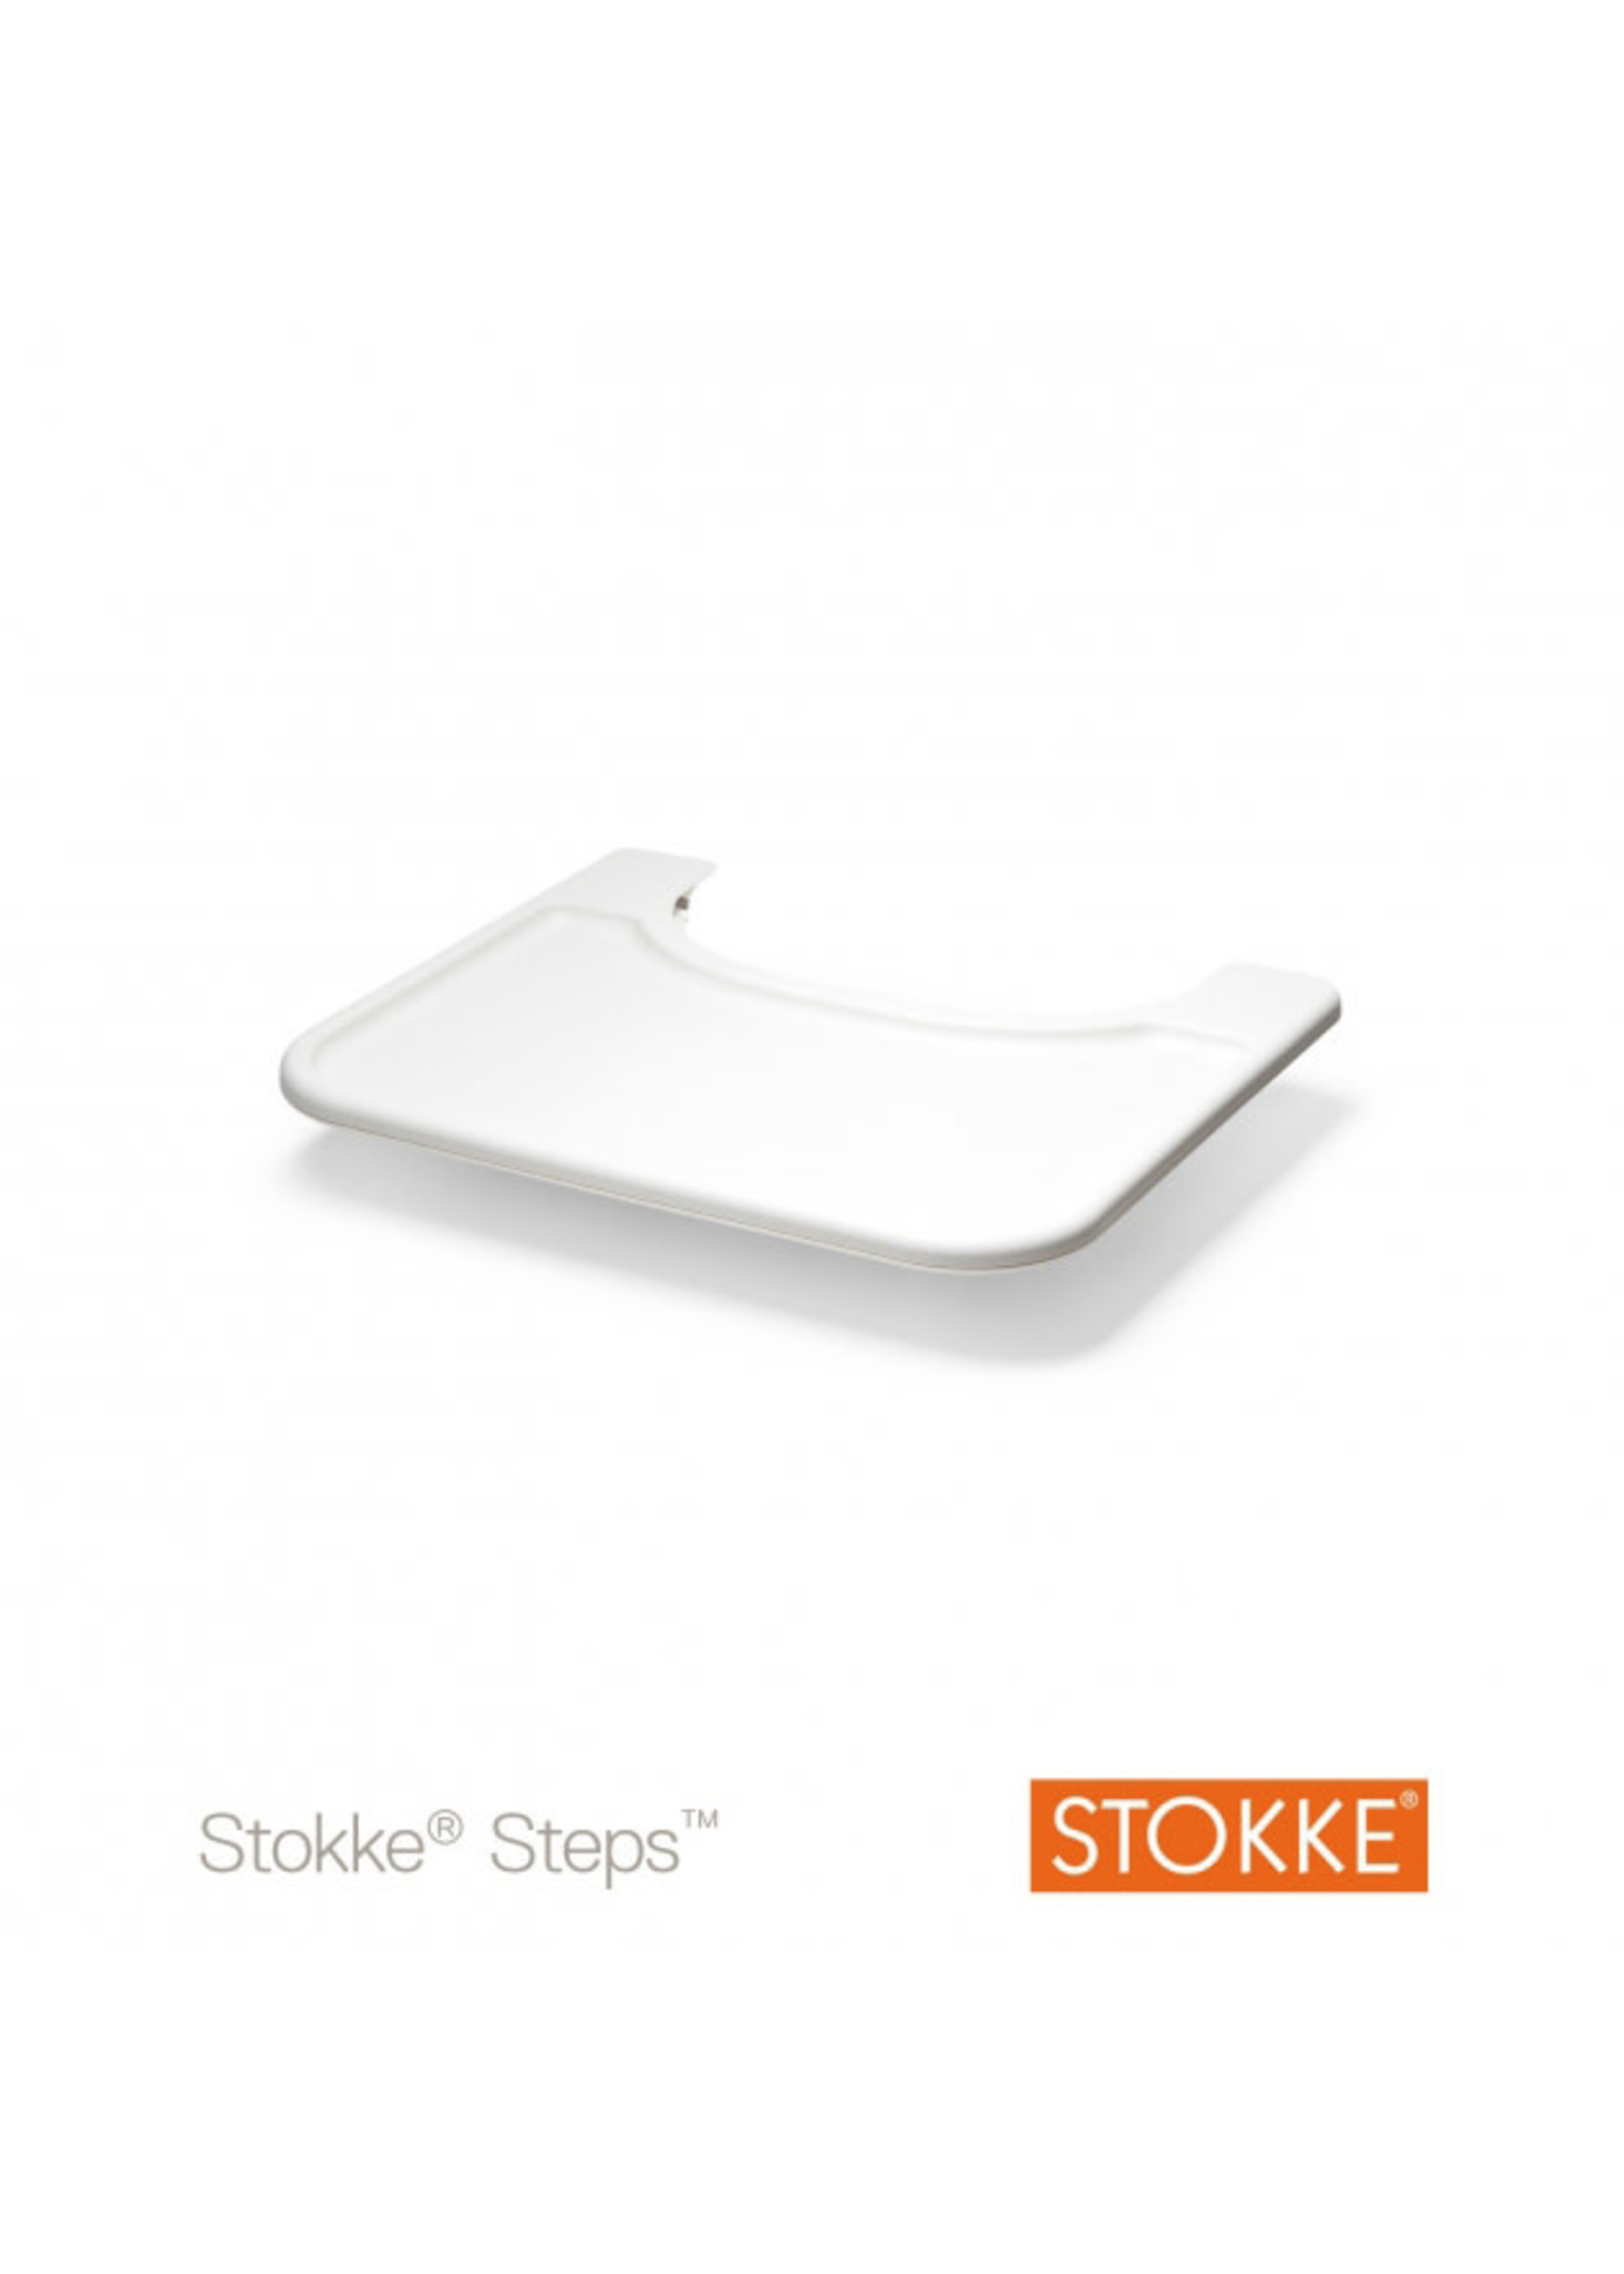 Stokke Stokke steps tray